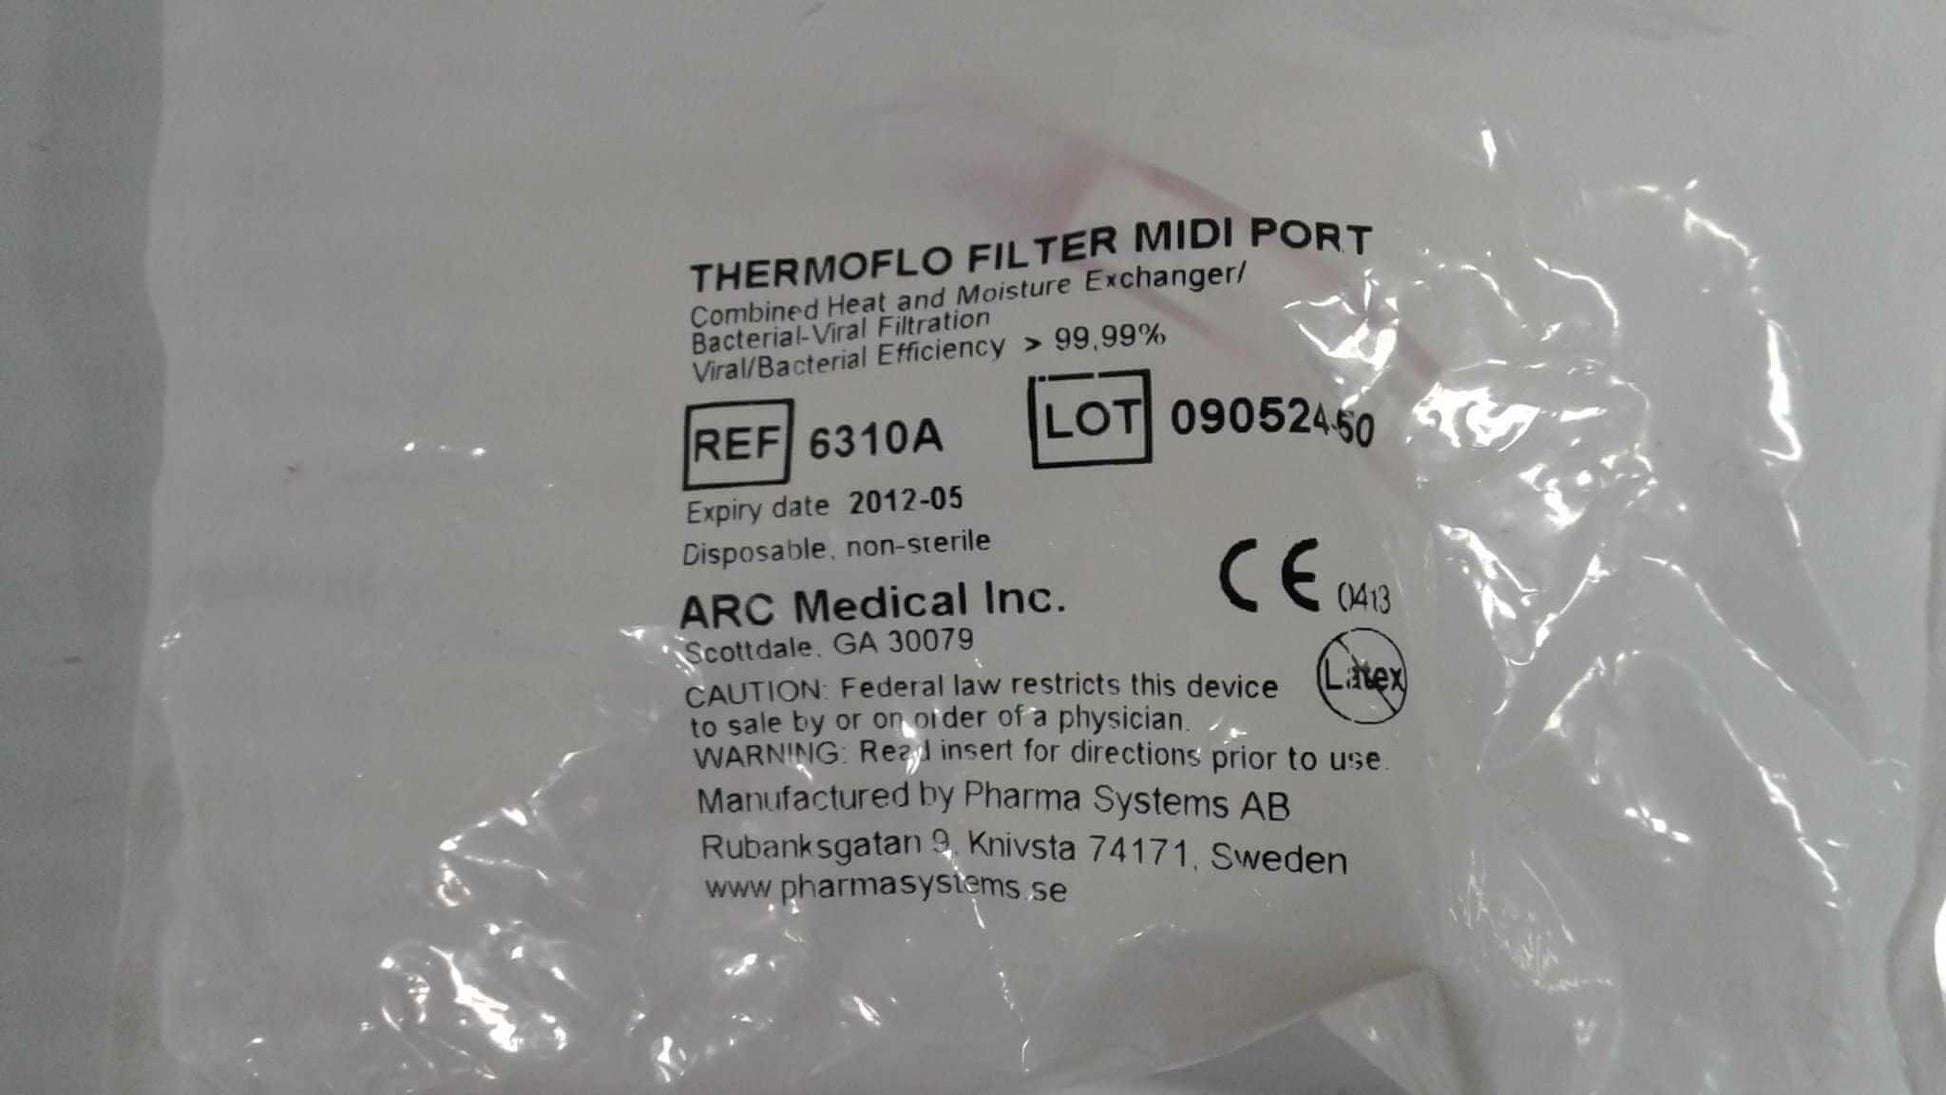 NEW ARC Medical Inc ThermoFlo Filter Midi EcoPak 6310A - MBR Medicals